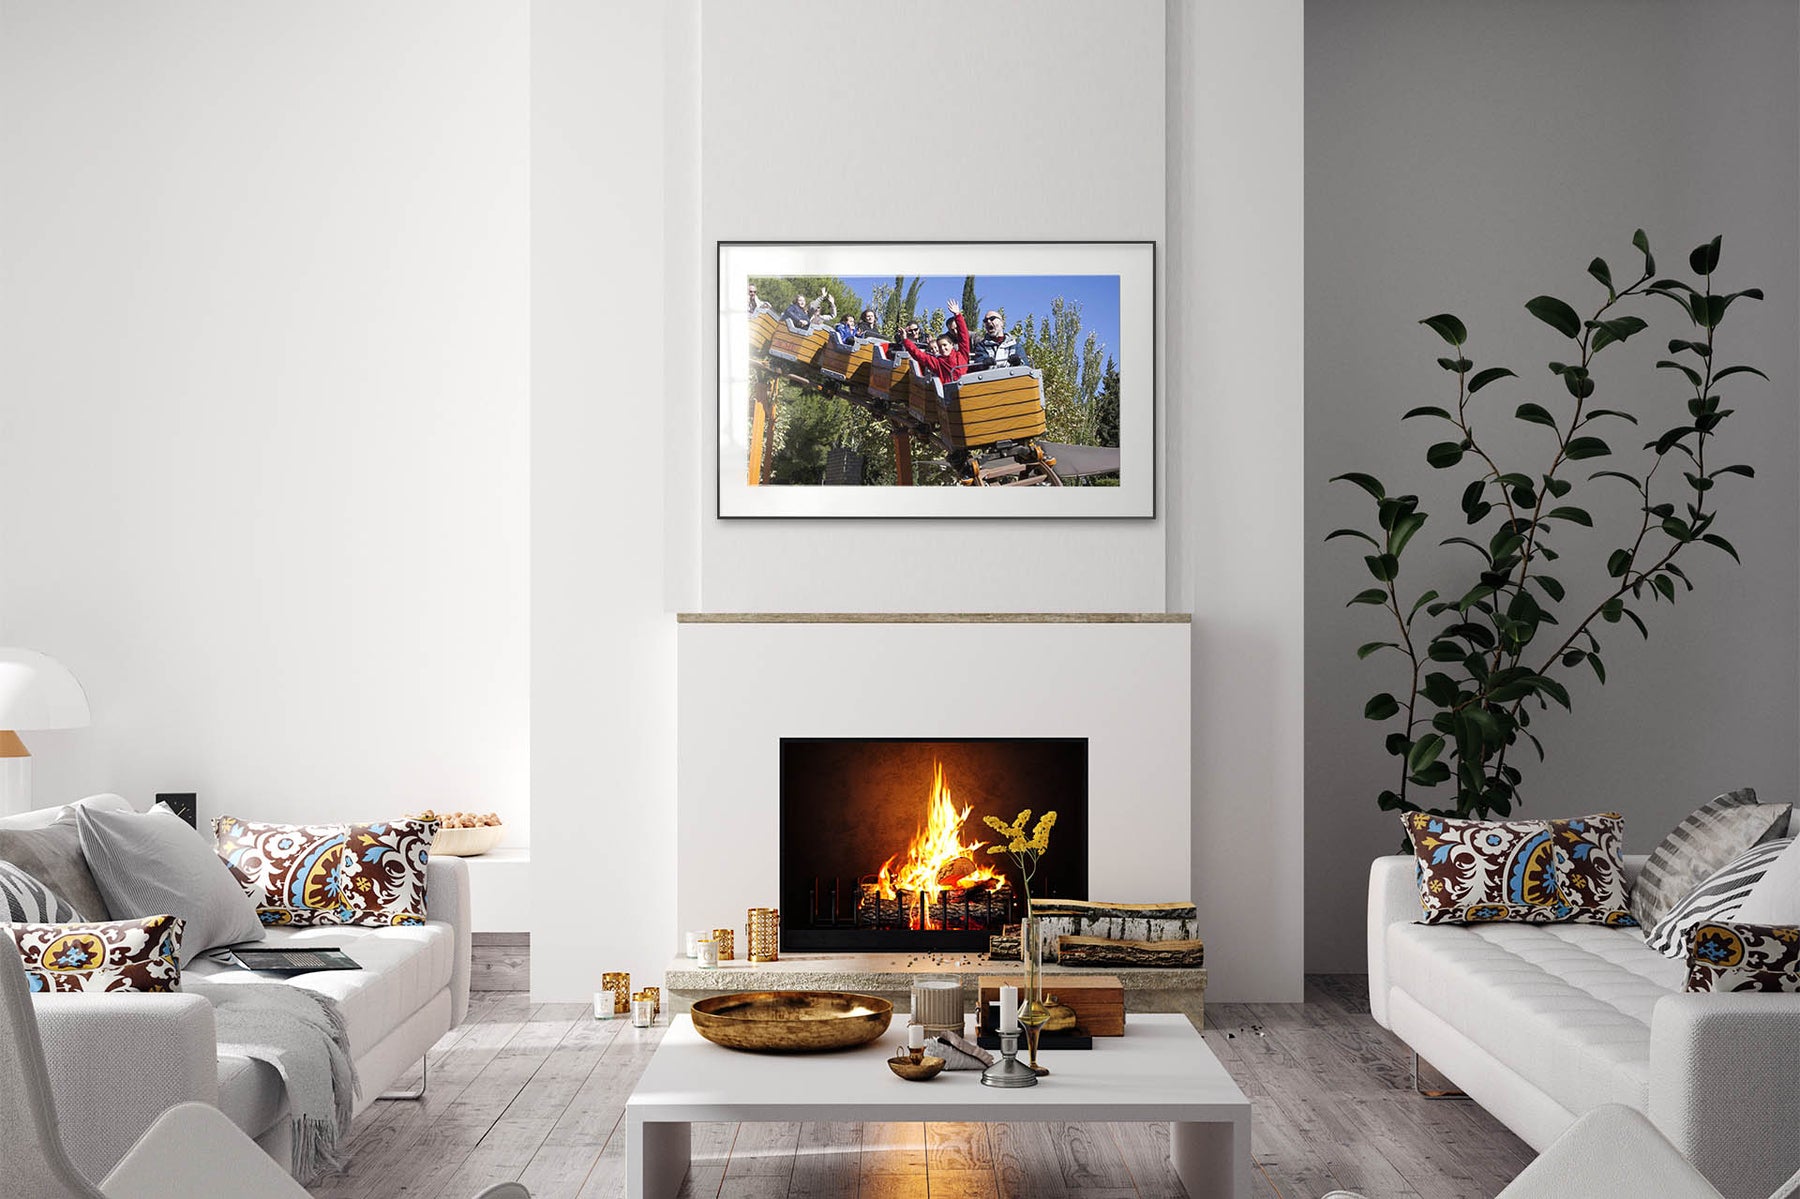 fotografías decorativas en Smart Frame para salón